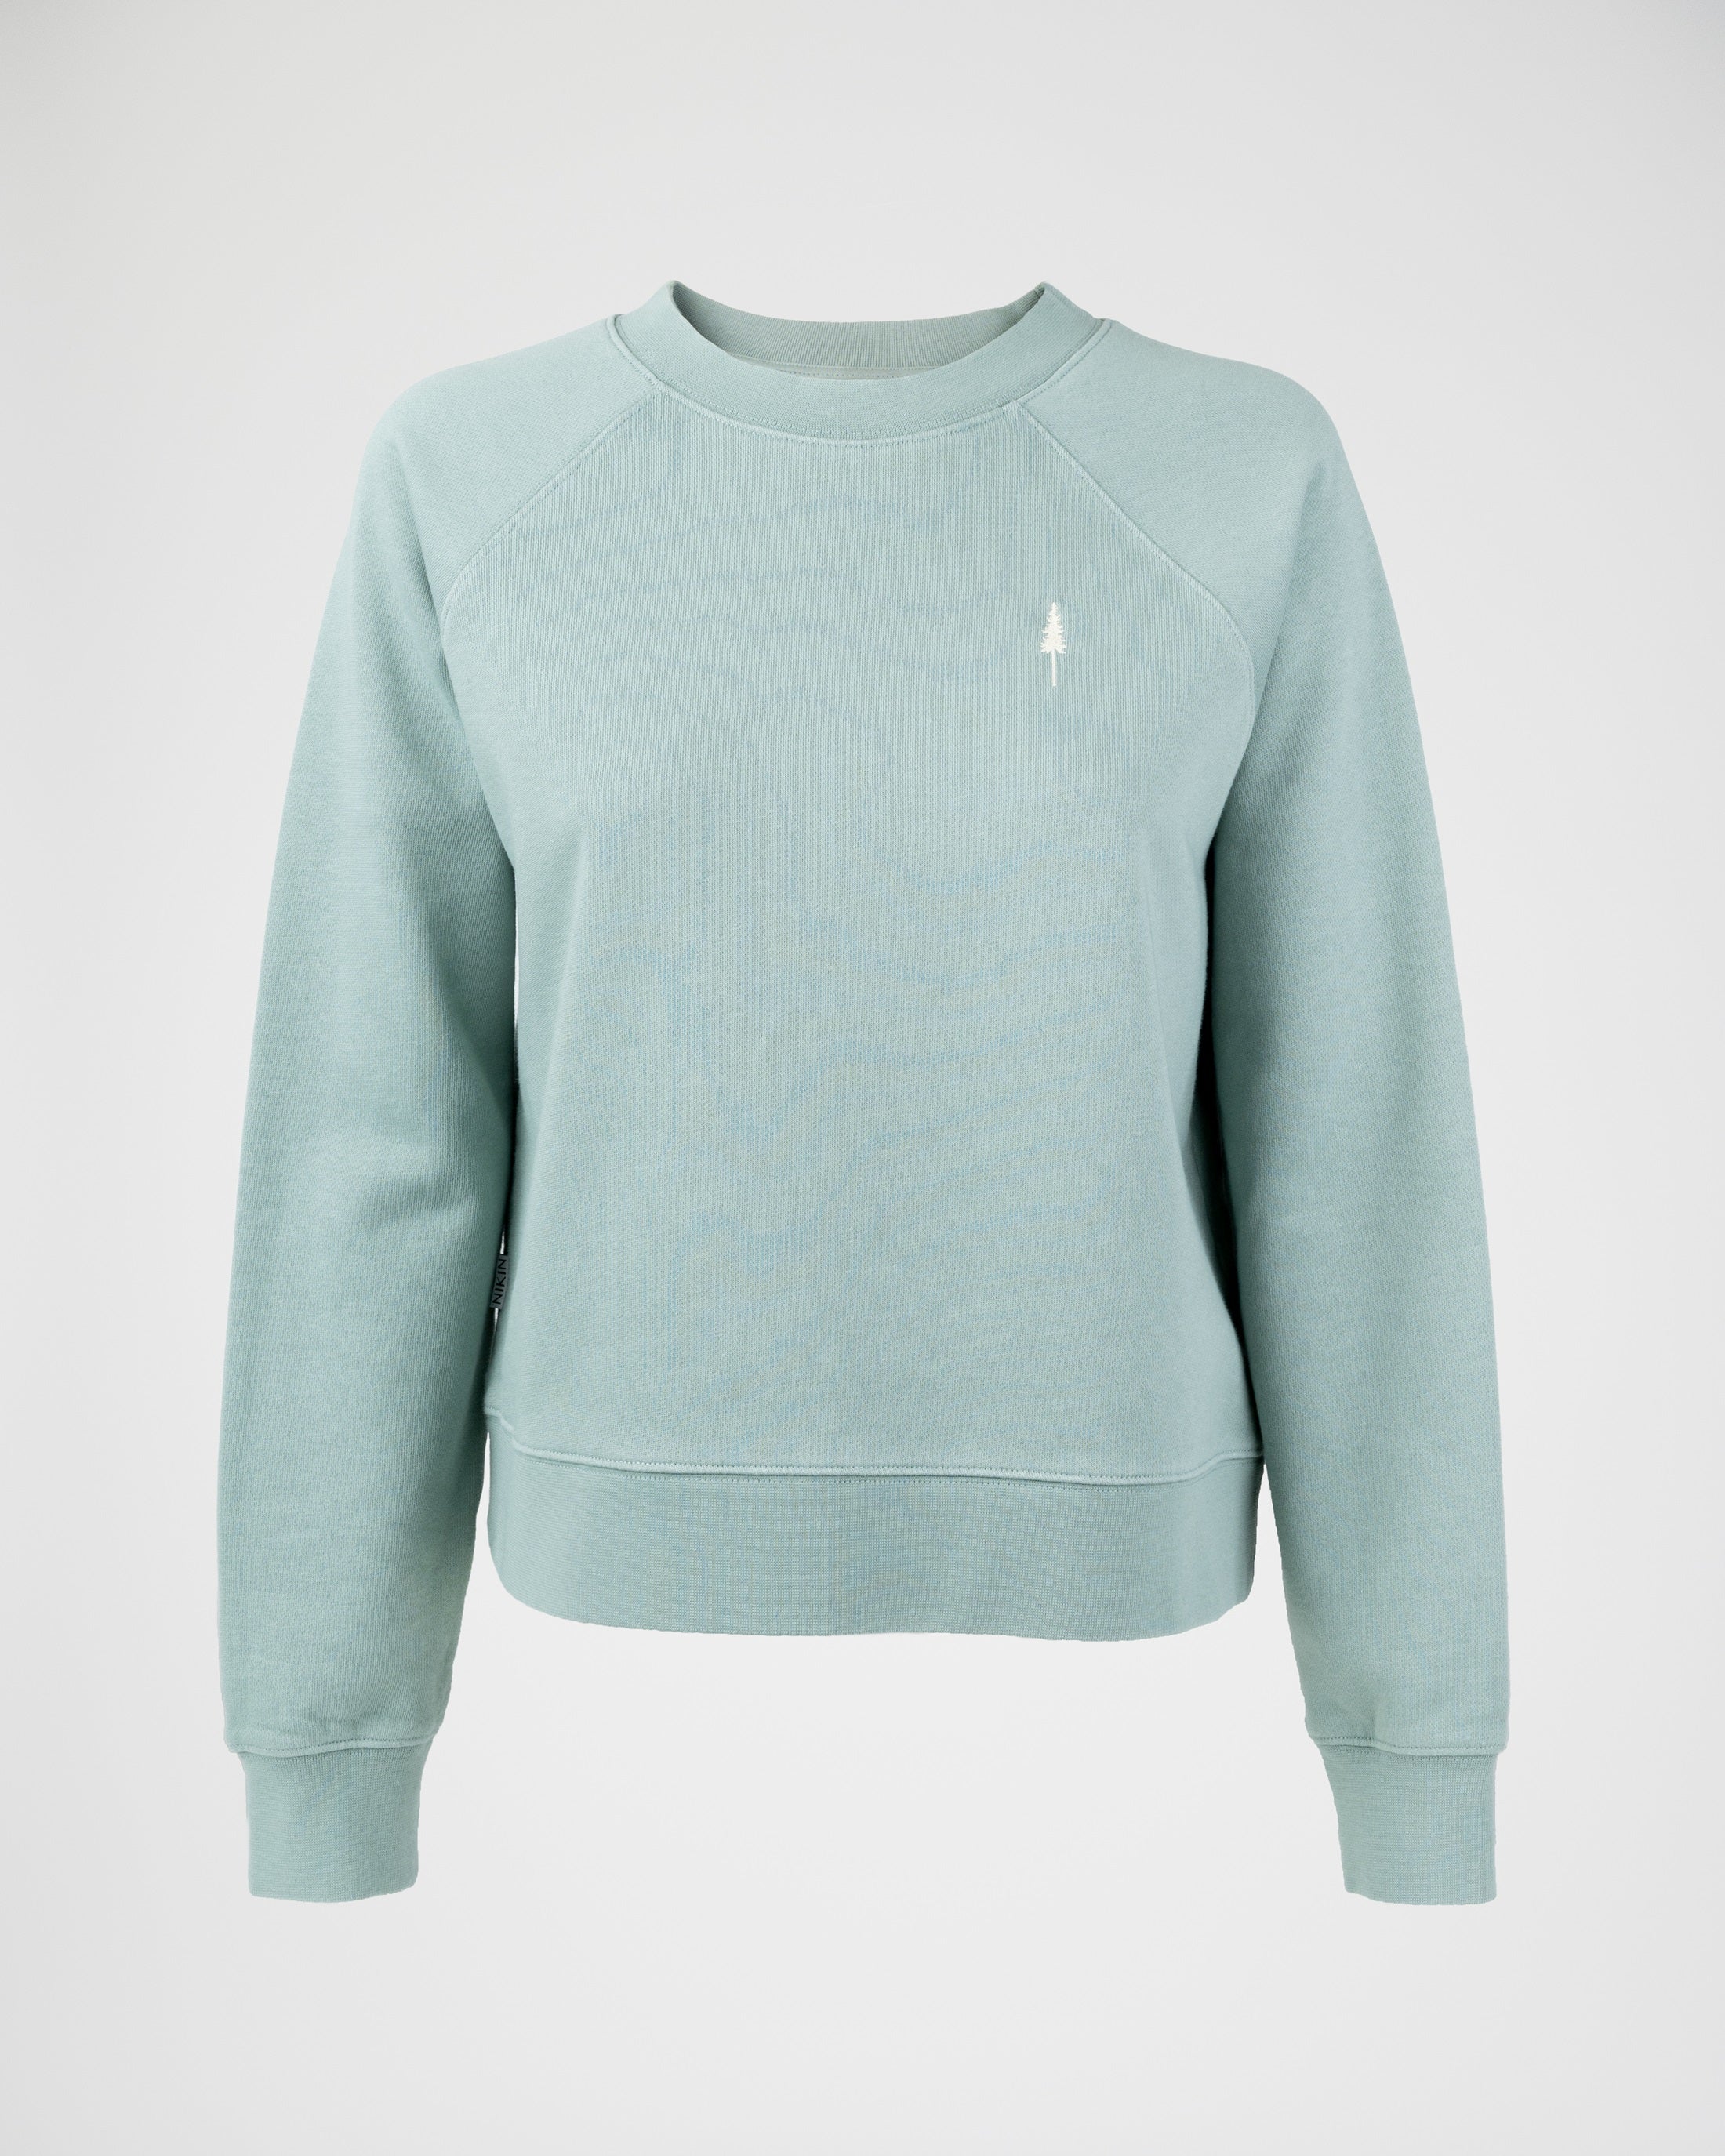 Sweatshirt femme TreeSweater Raglan Turquoise